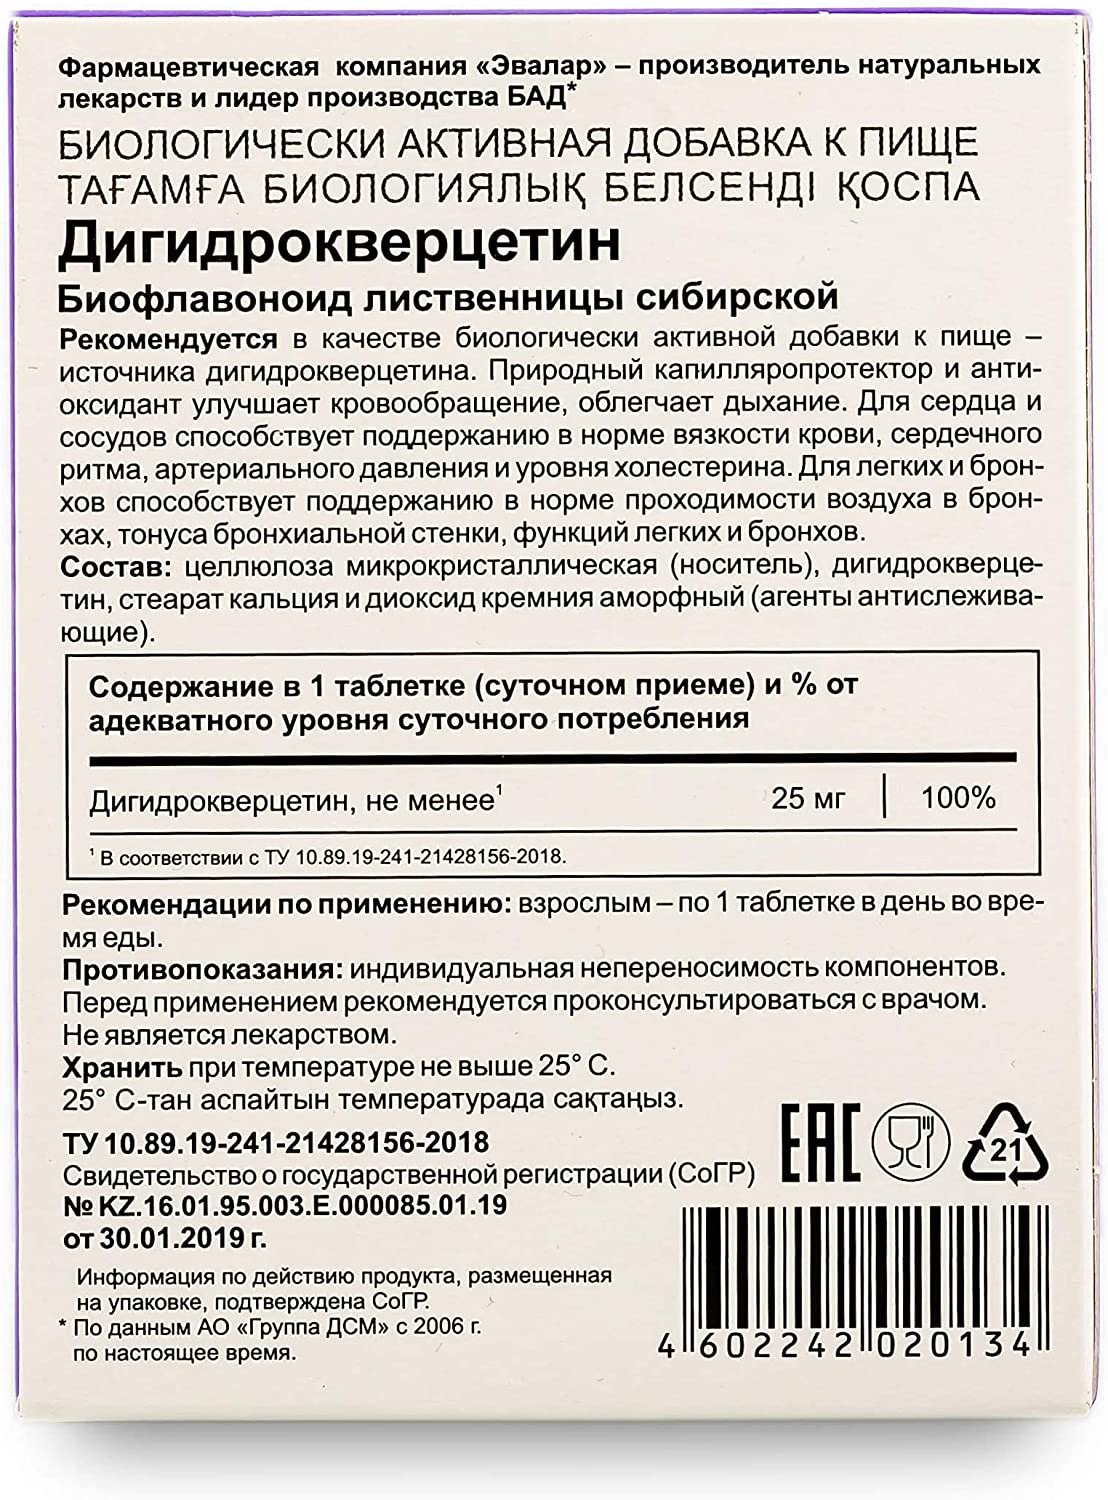 Dihydro Quercetin Evalar Siberian Pine Larch 100 Tabs